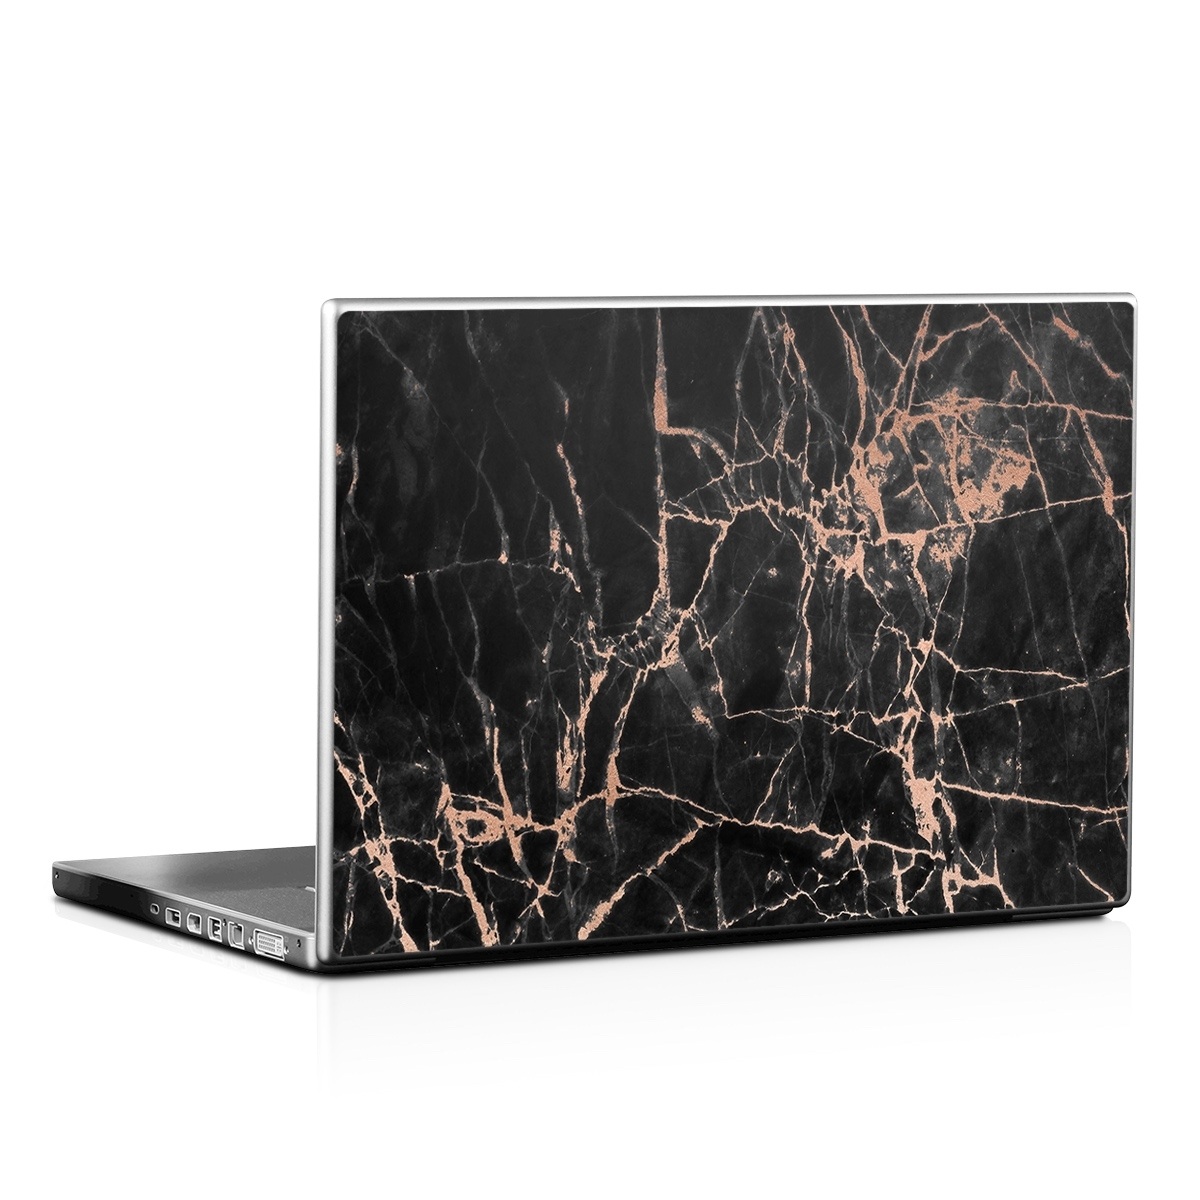 Laptop Skin - Rose Quartz Marble (Image 1)